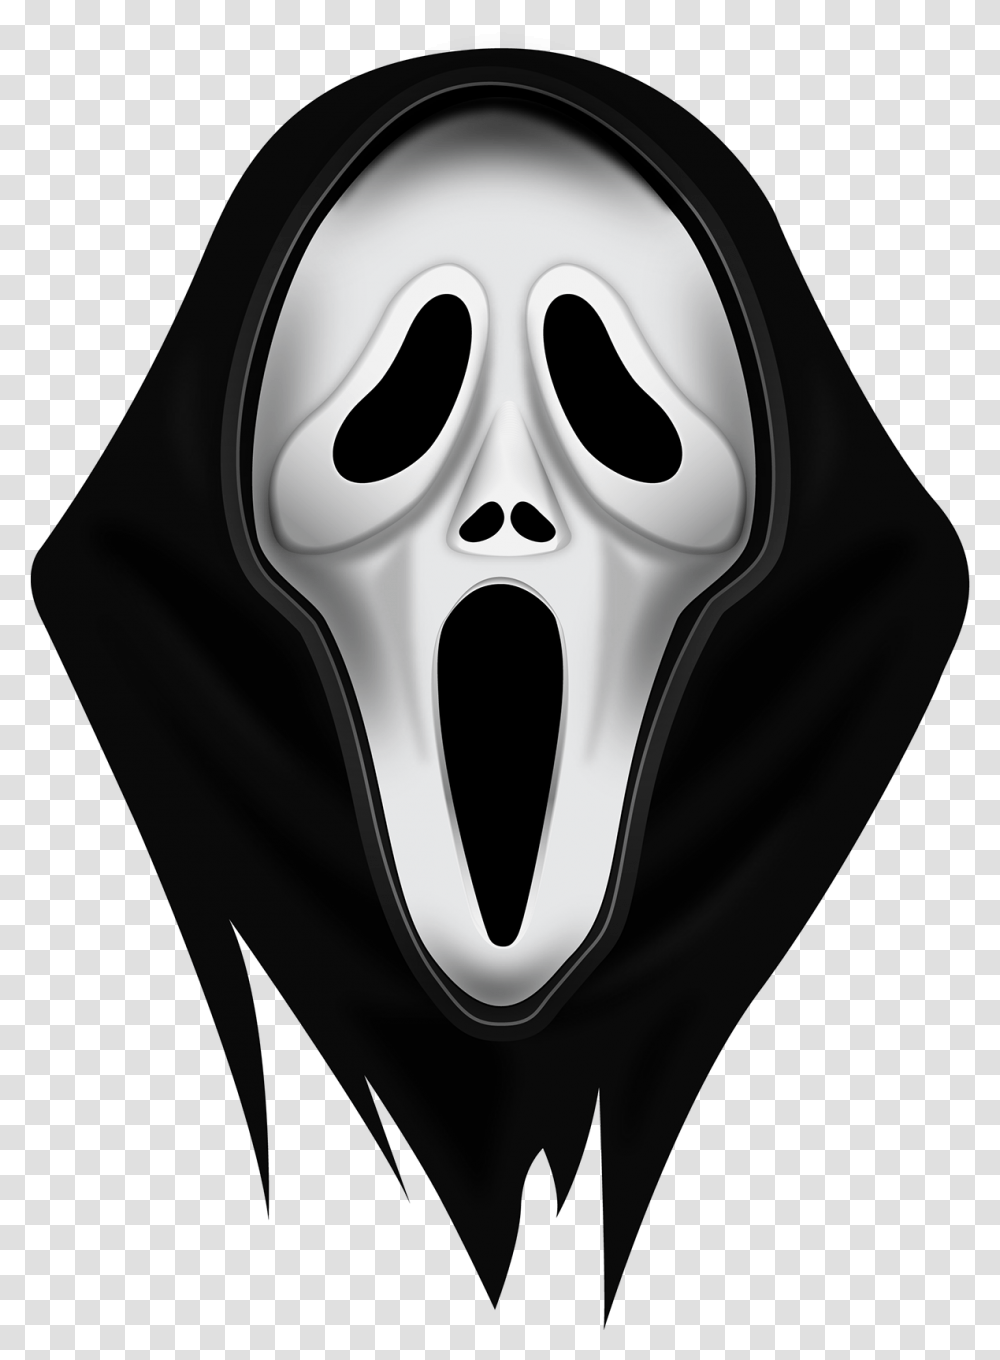 Download Hd Scream Mask Illustration Scream, Helmet, Clothing, Apparel Transparent Png